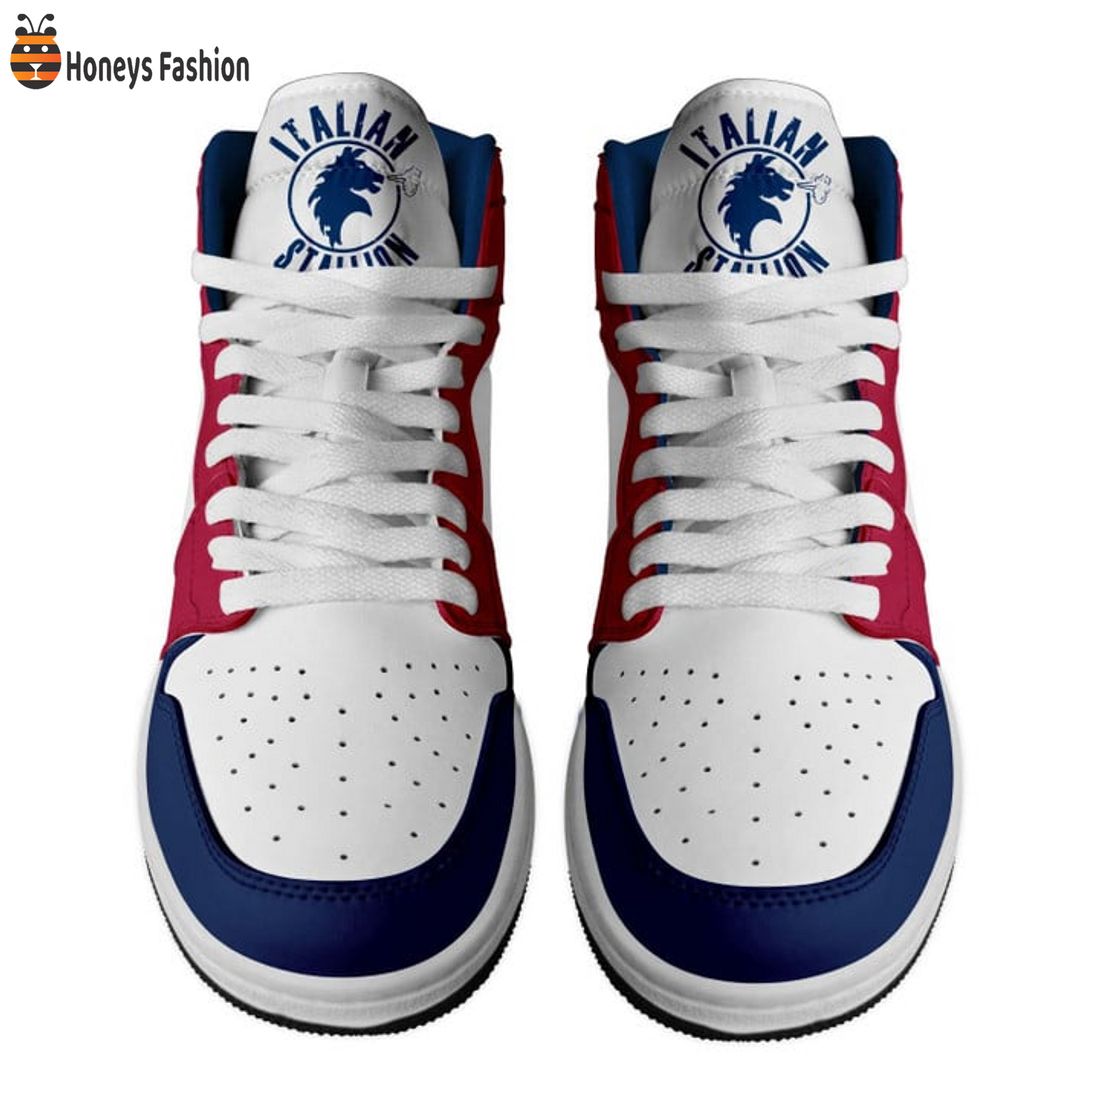 TRENDING Rocky Balboa Ameircan Flag Nike Air Jordan 1 High Sneakers